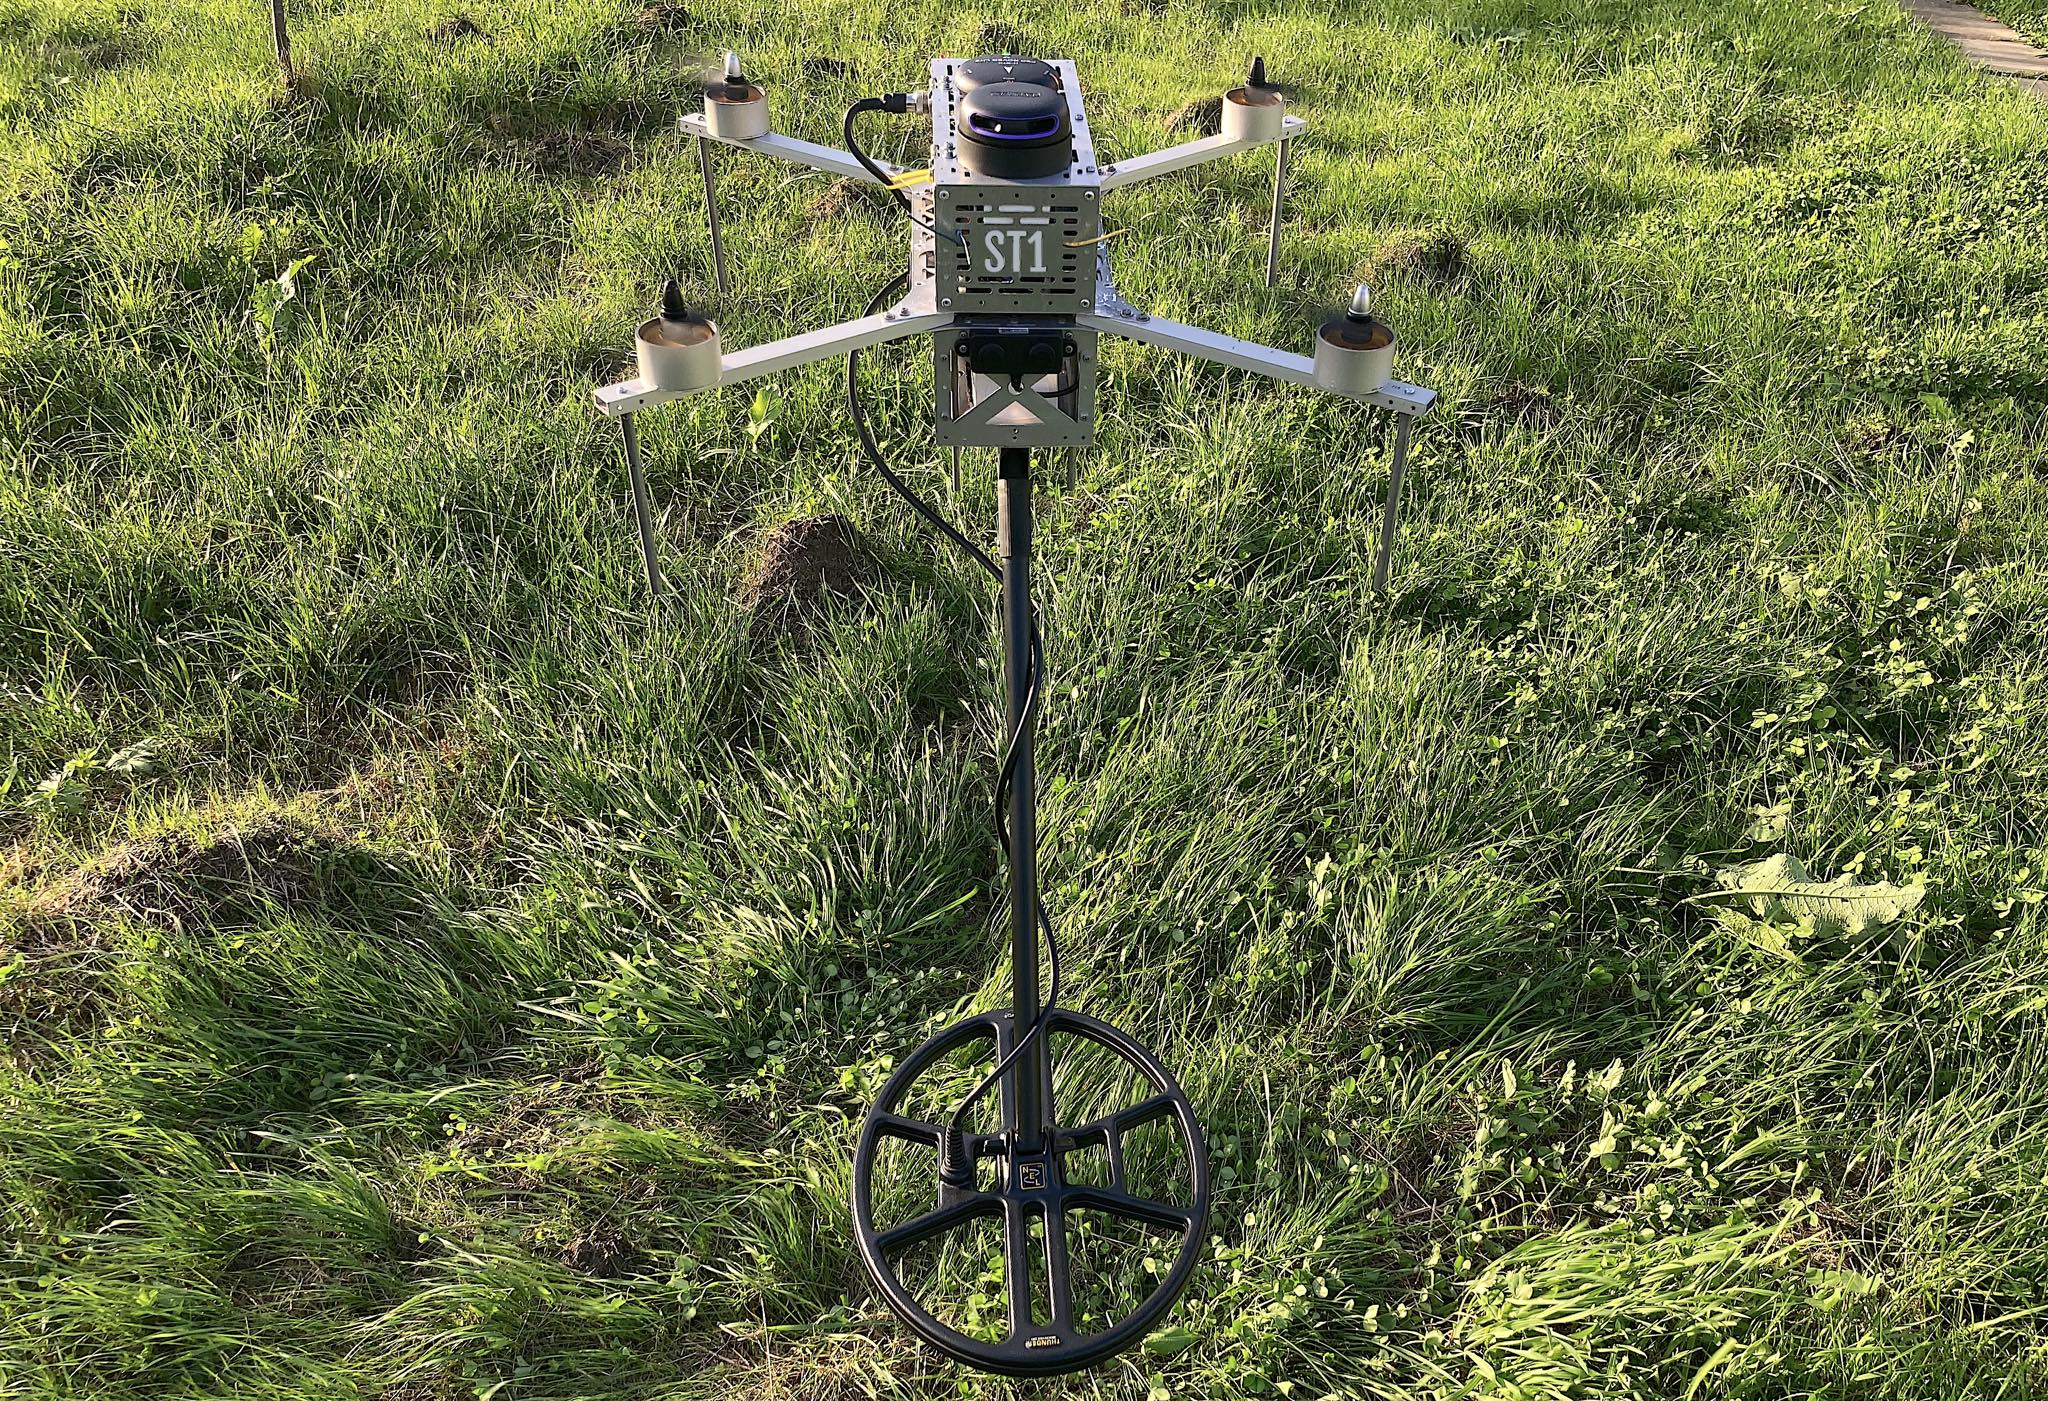 Ukrainian IT professional turns innovative demining drone inventor